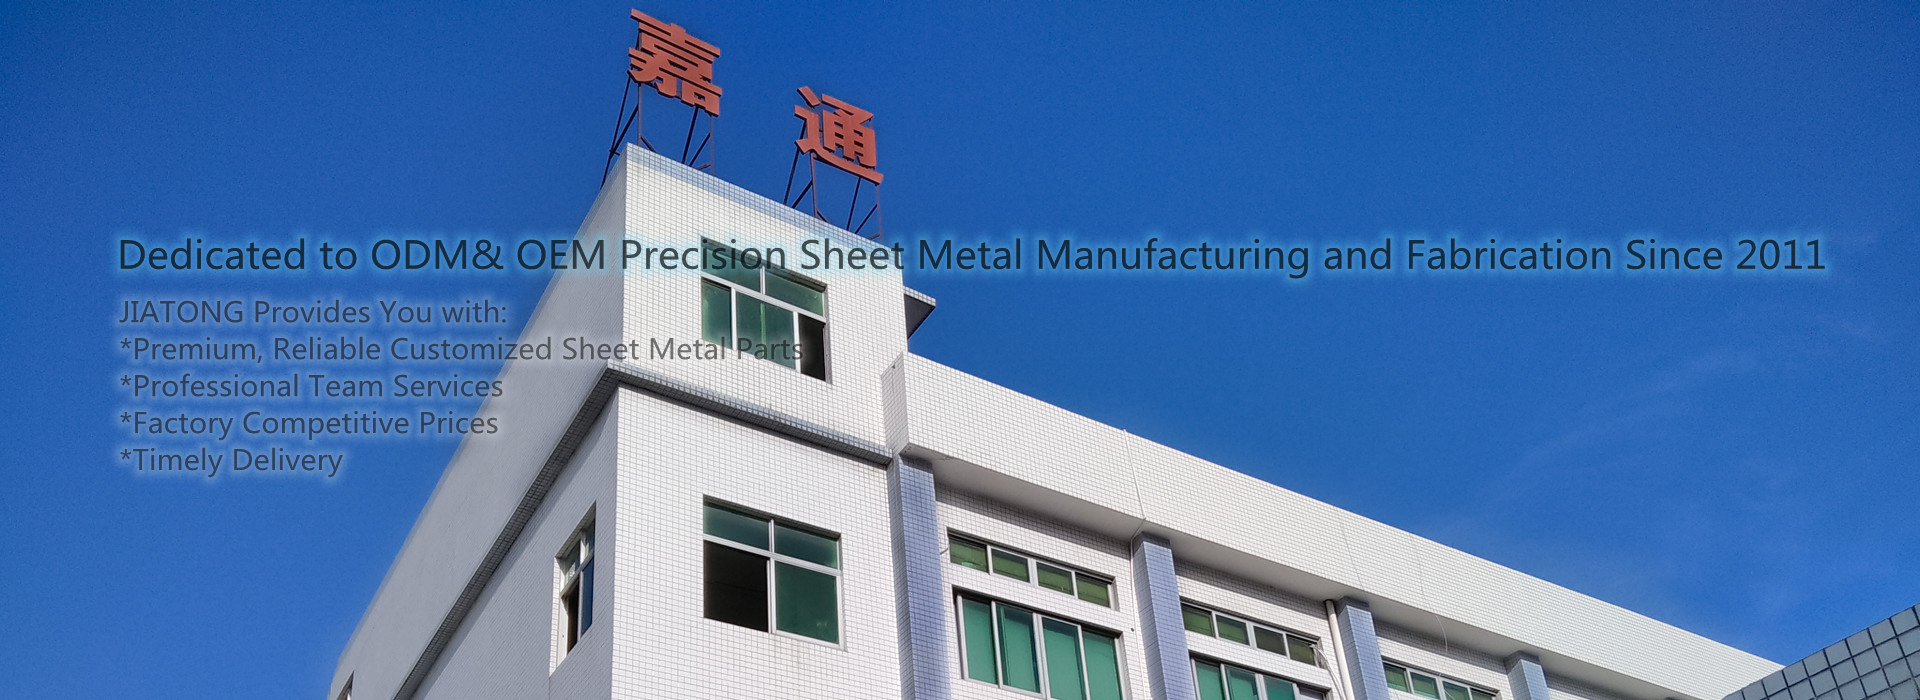 Jiatong Precision Sheet Metal Manufacturer and Fabricator 